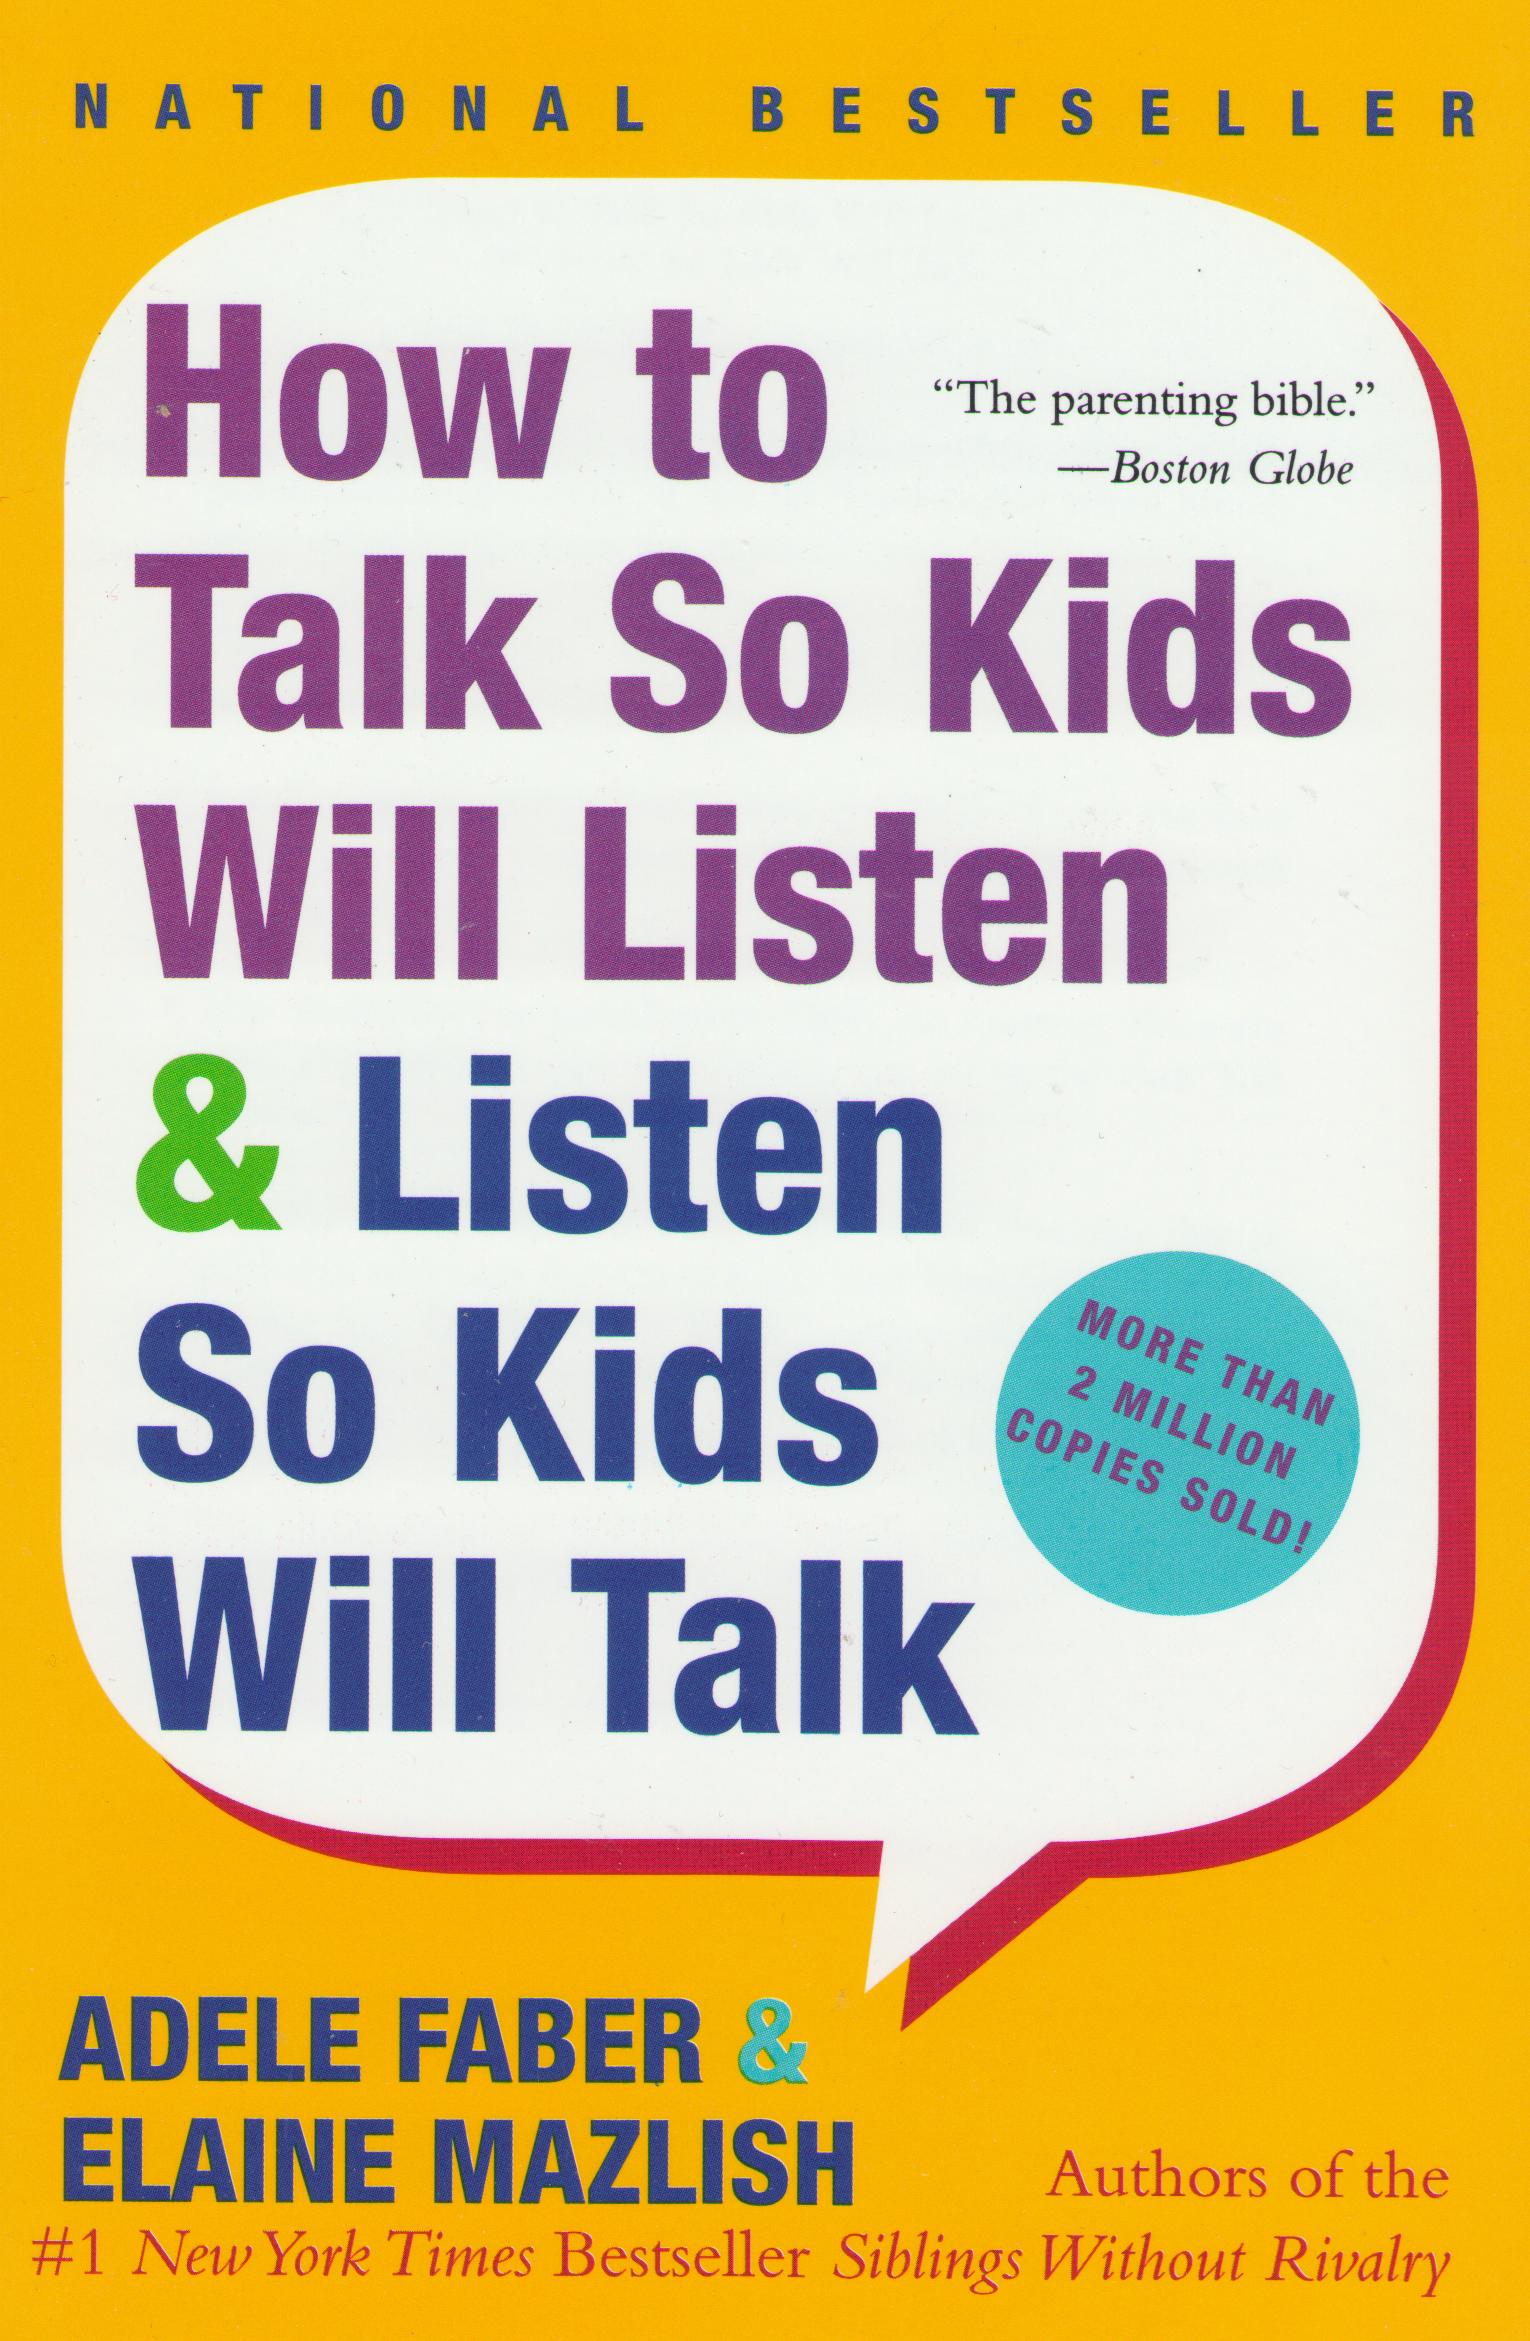 How to Talk So Kids Will Listen and Listen So Kids Will Talk Summary